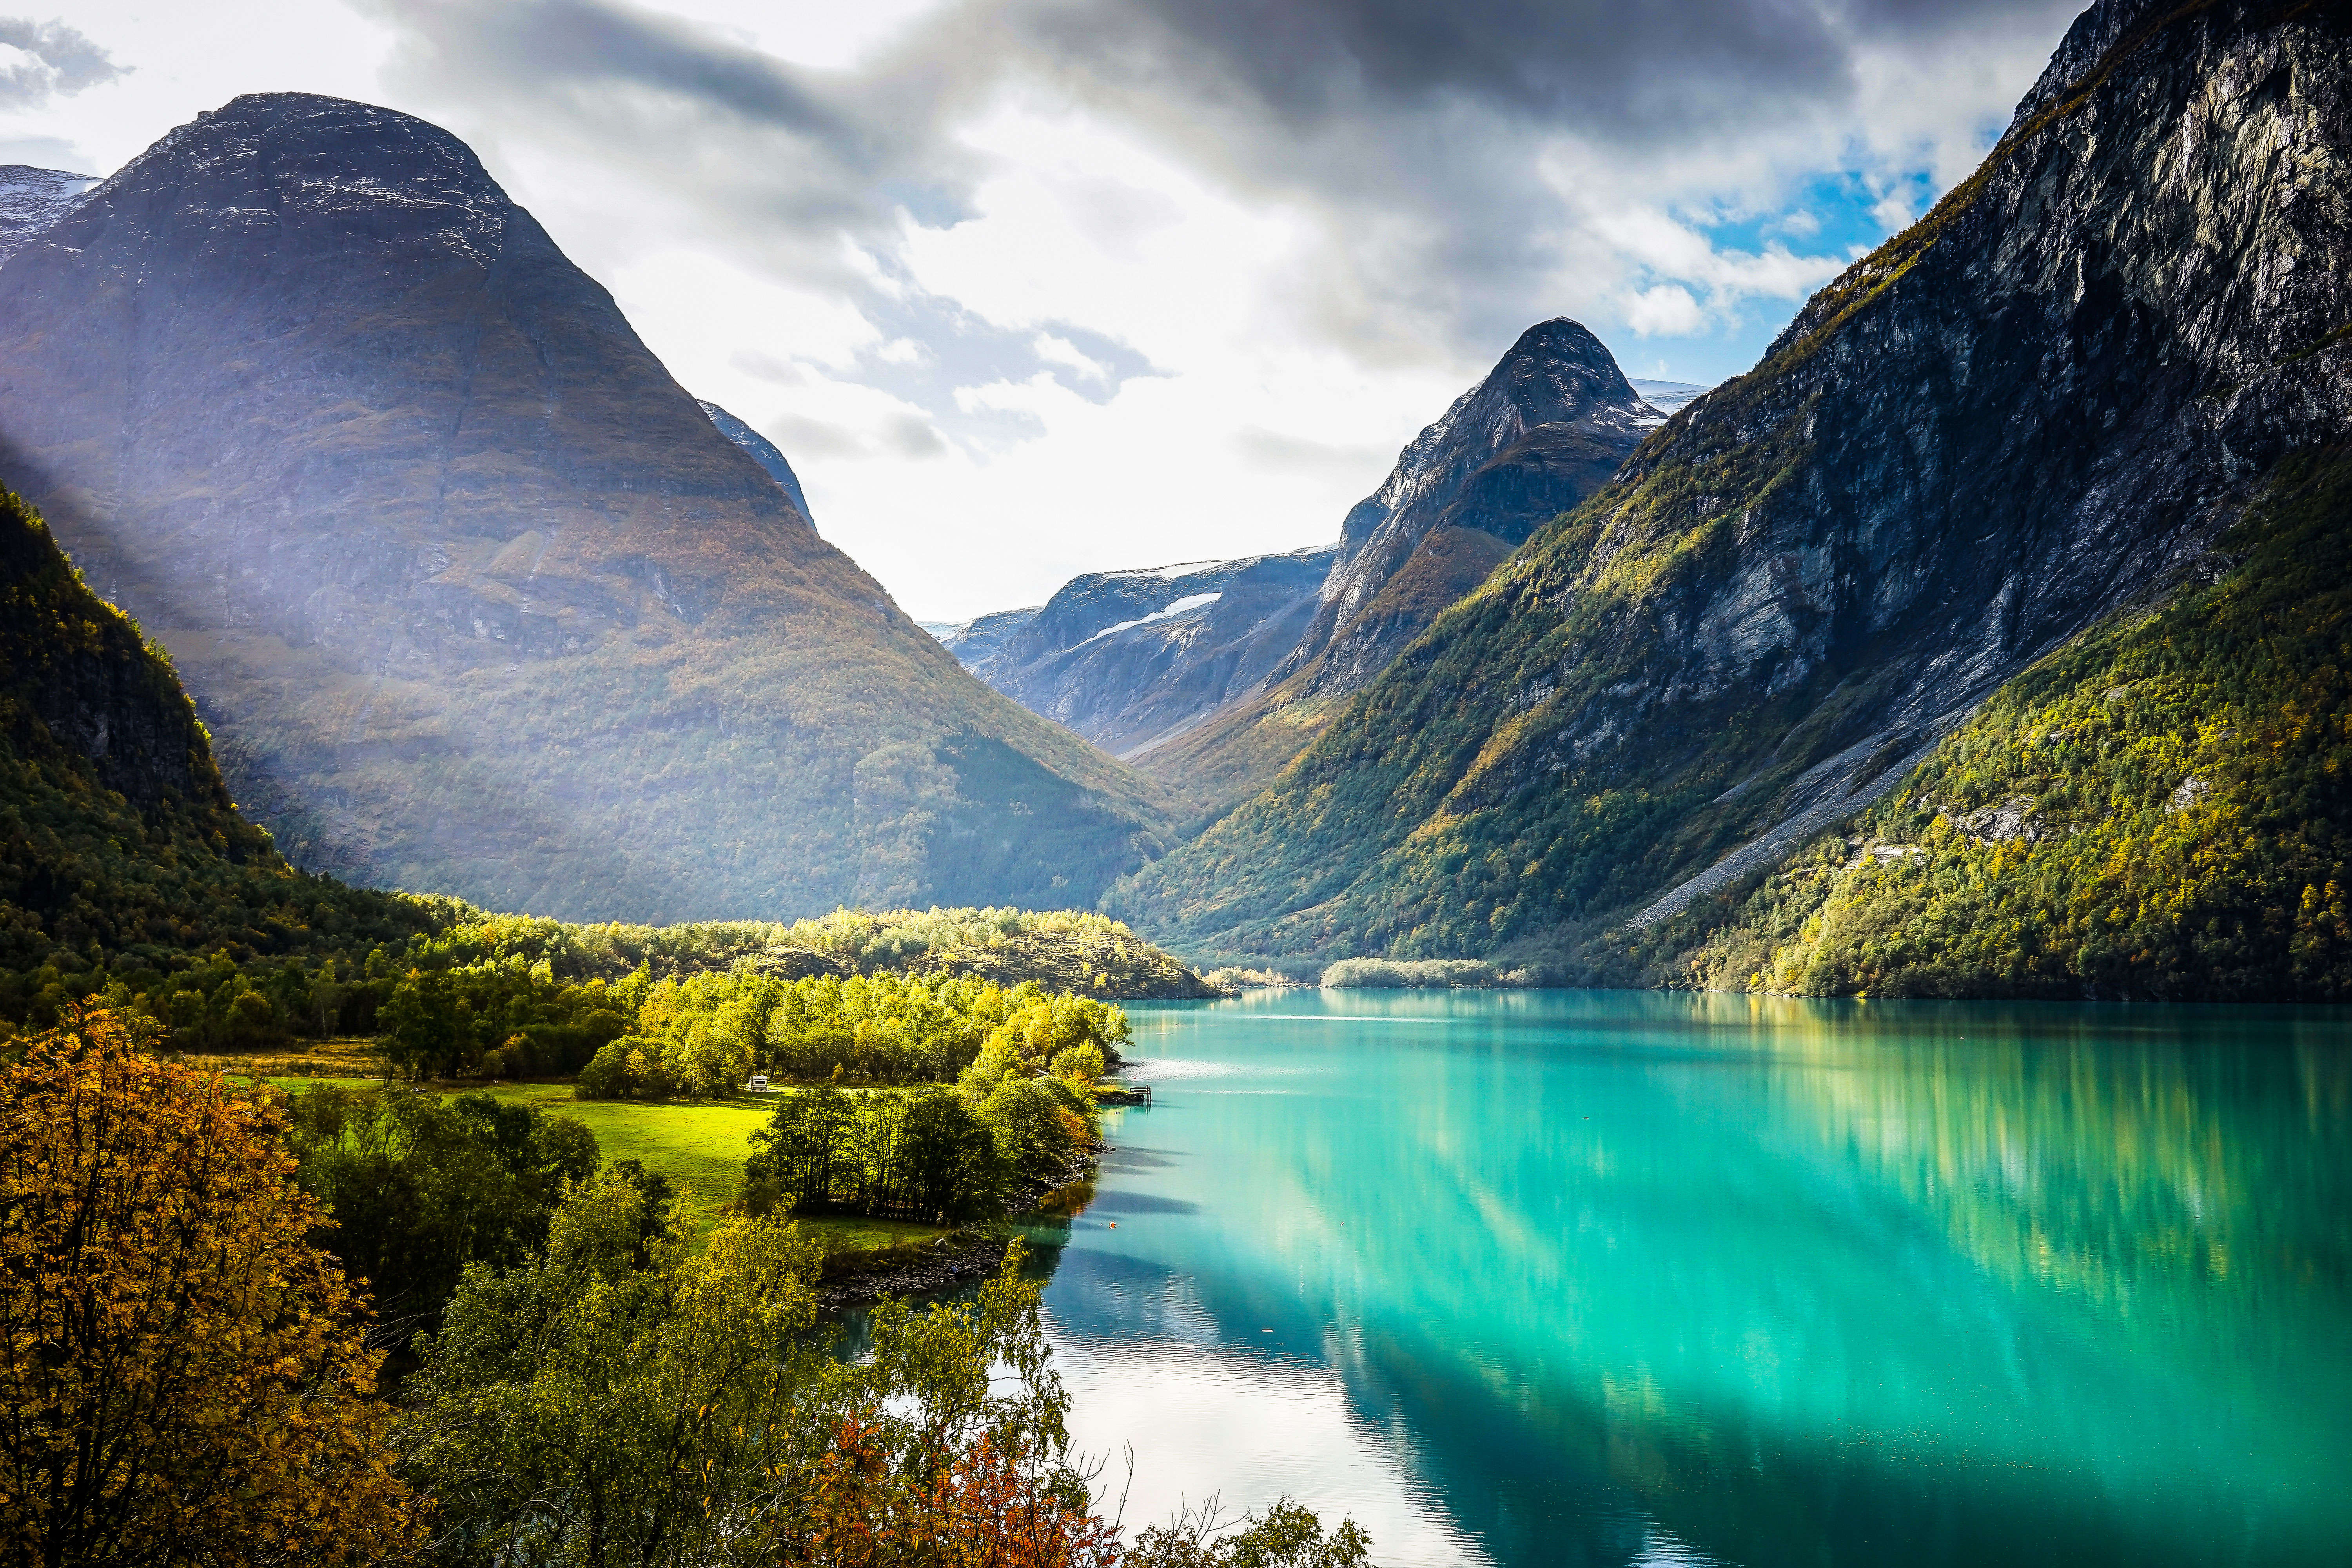 Norway has a wealth of natural wonders